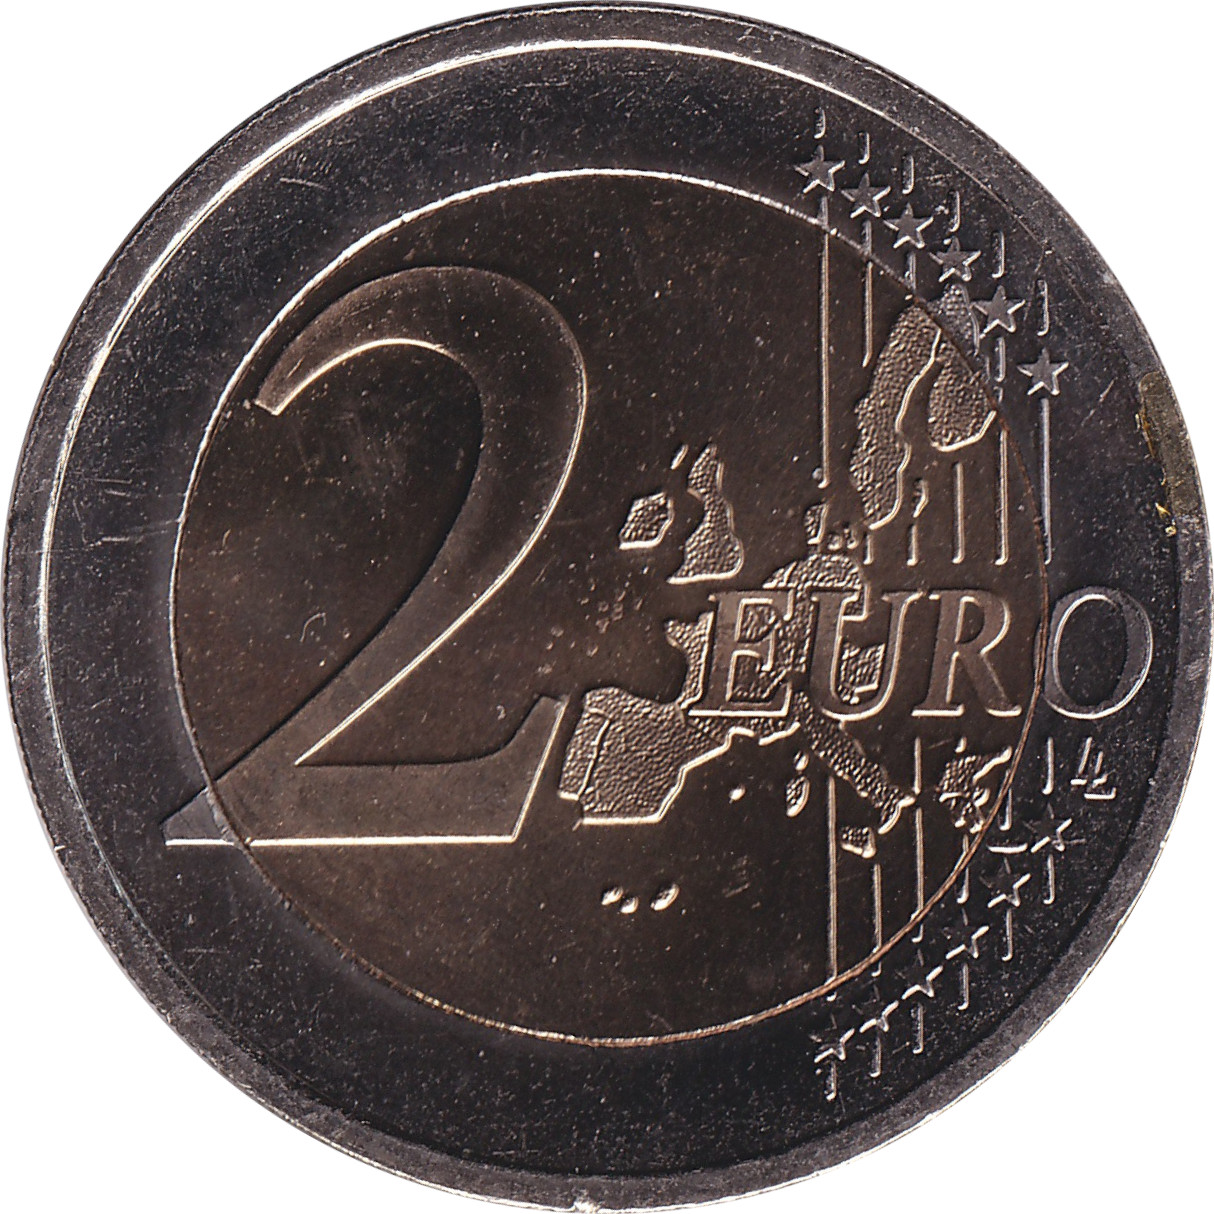 2 euro -  State Treaty